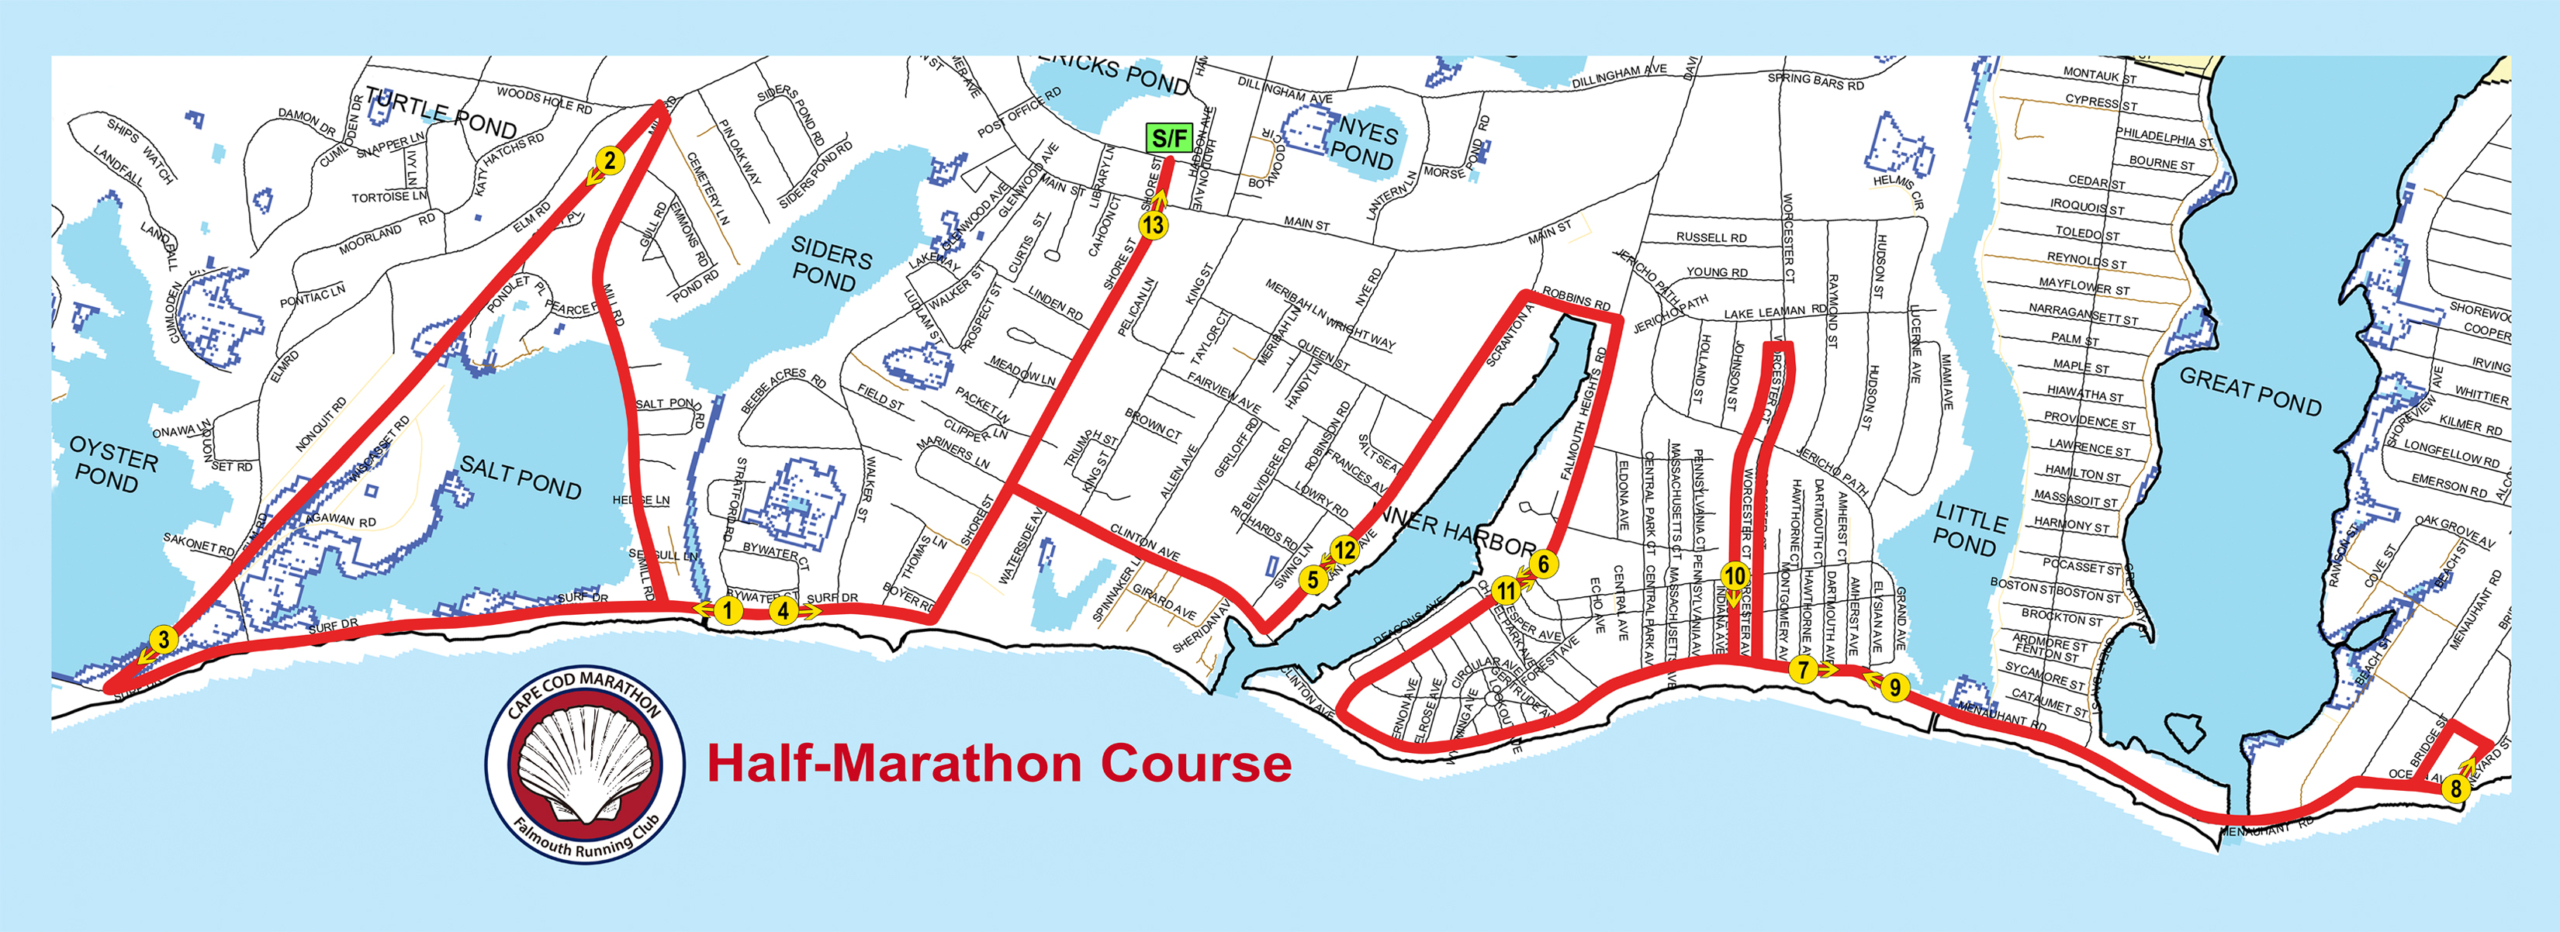 Cape Cod Marathon Half route map